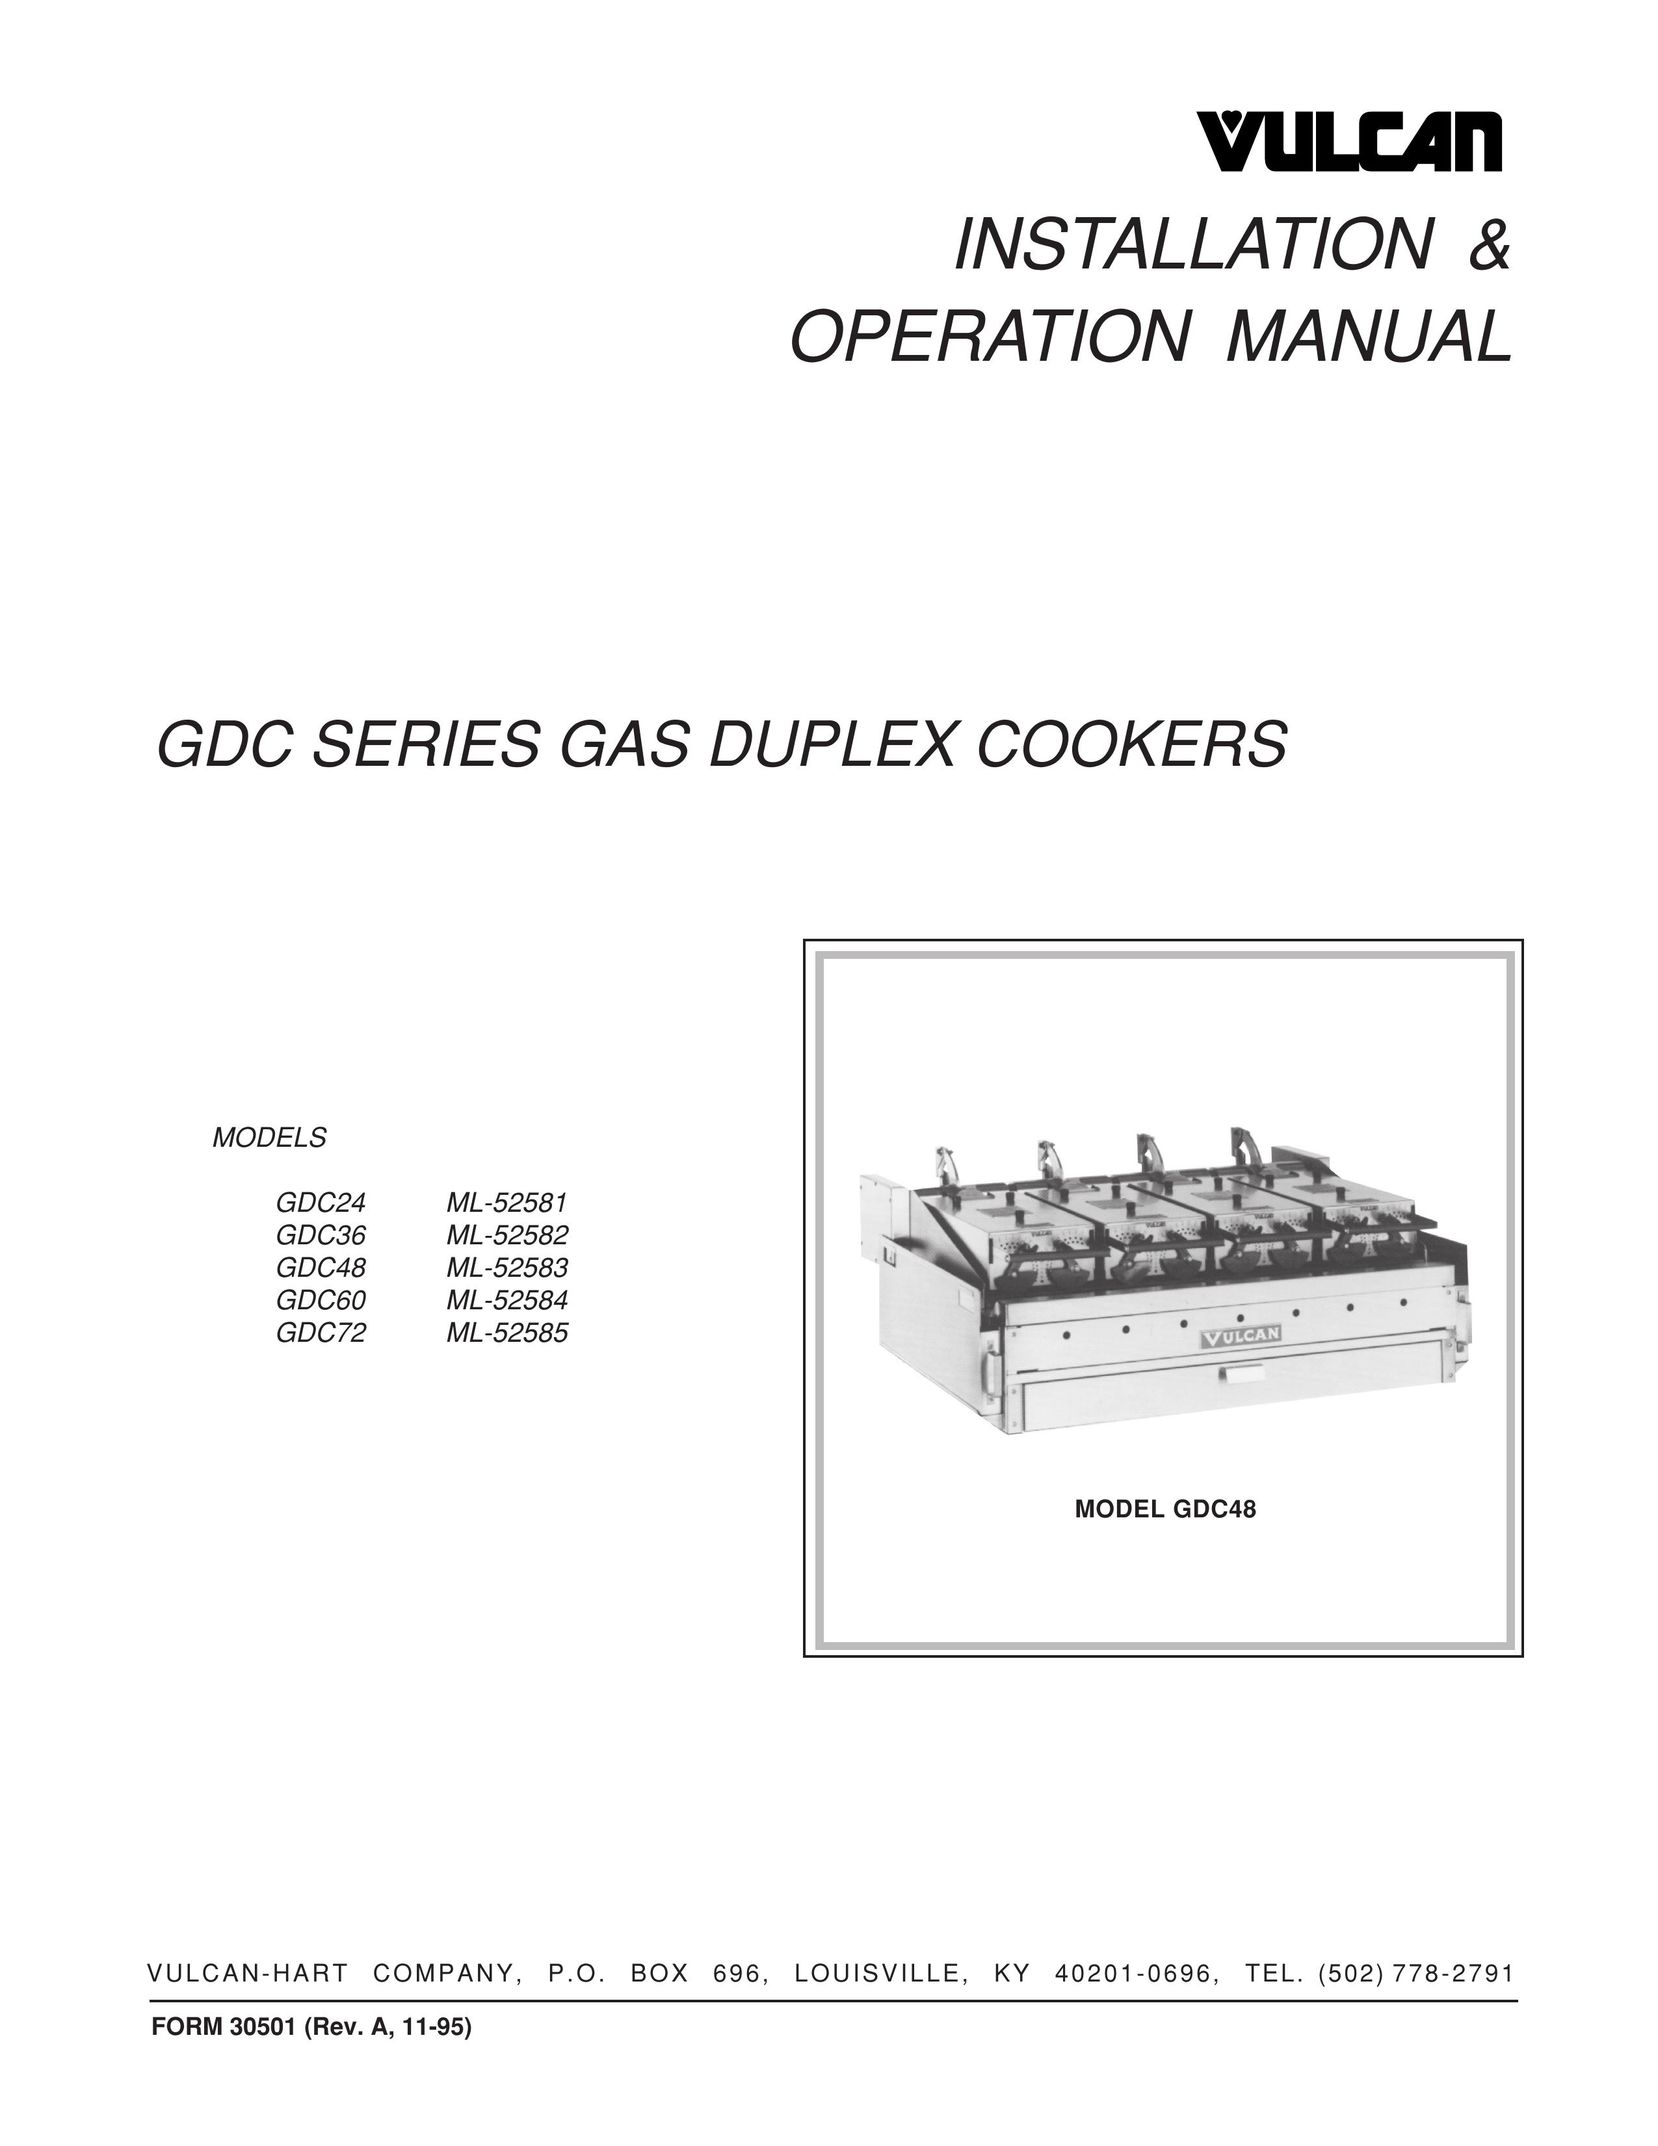 Vulcan-Hart GDC36 ML-52582 Cooktop User Manual